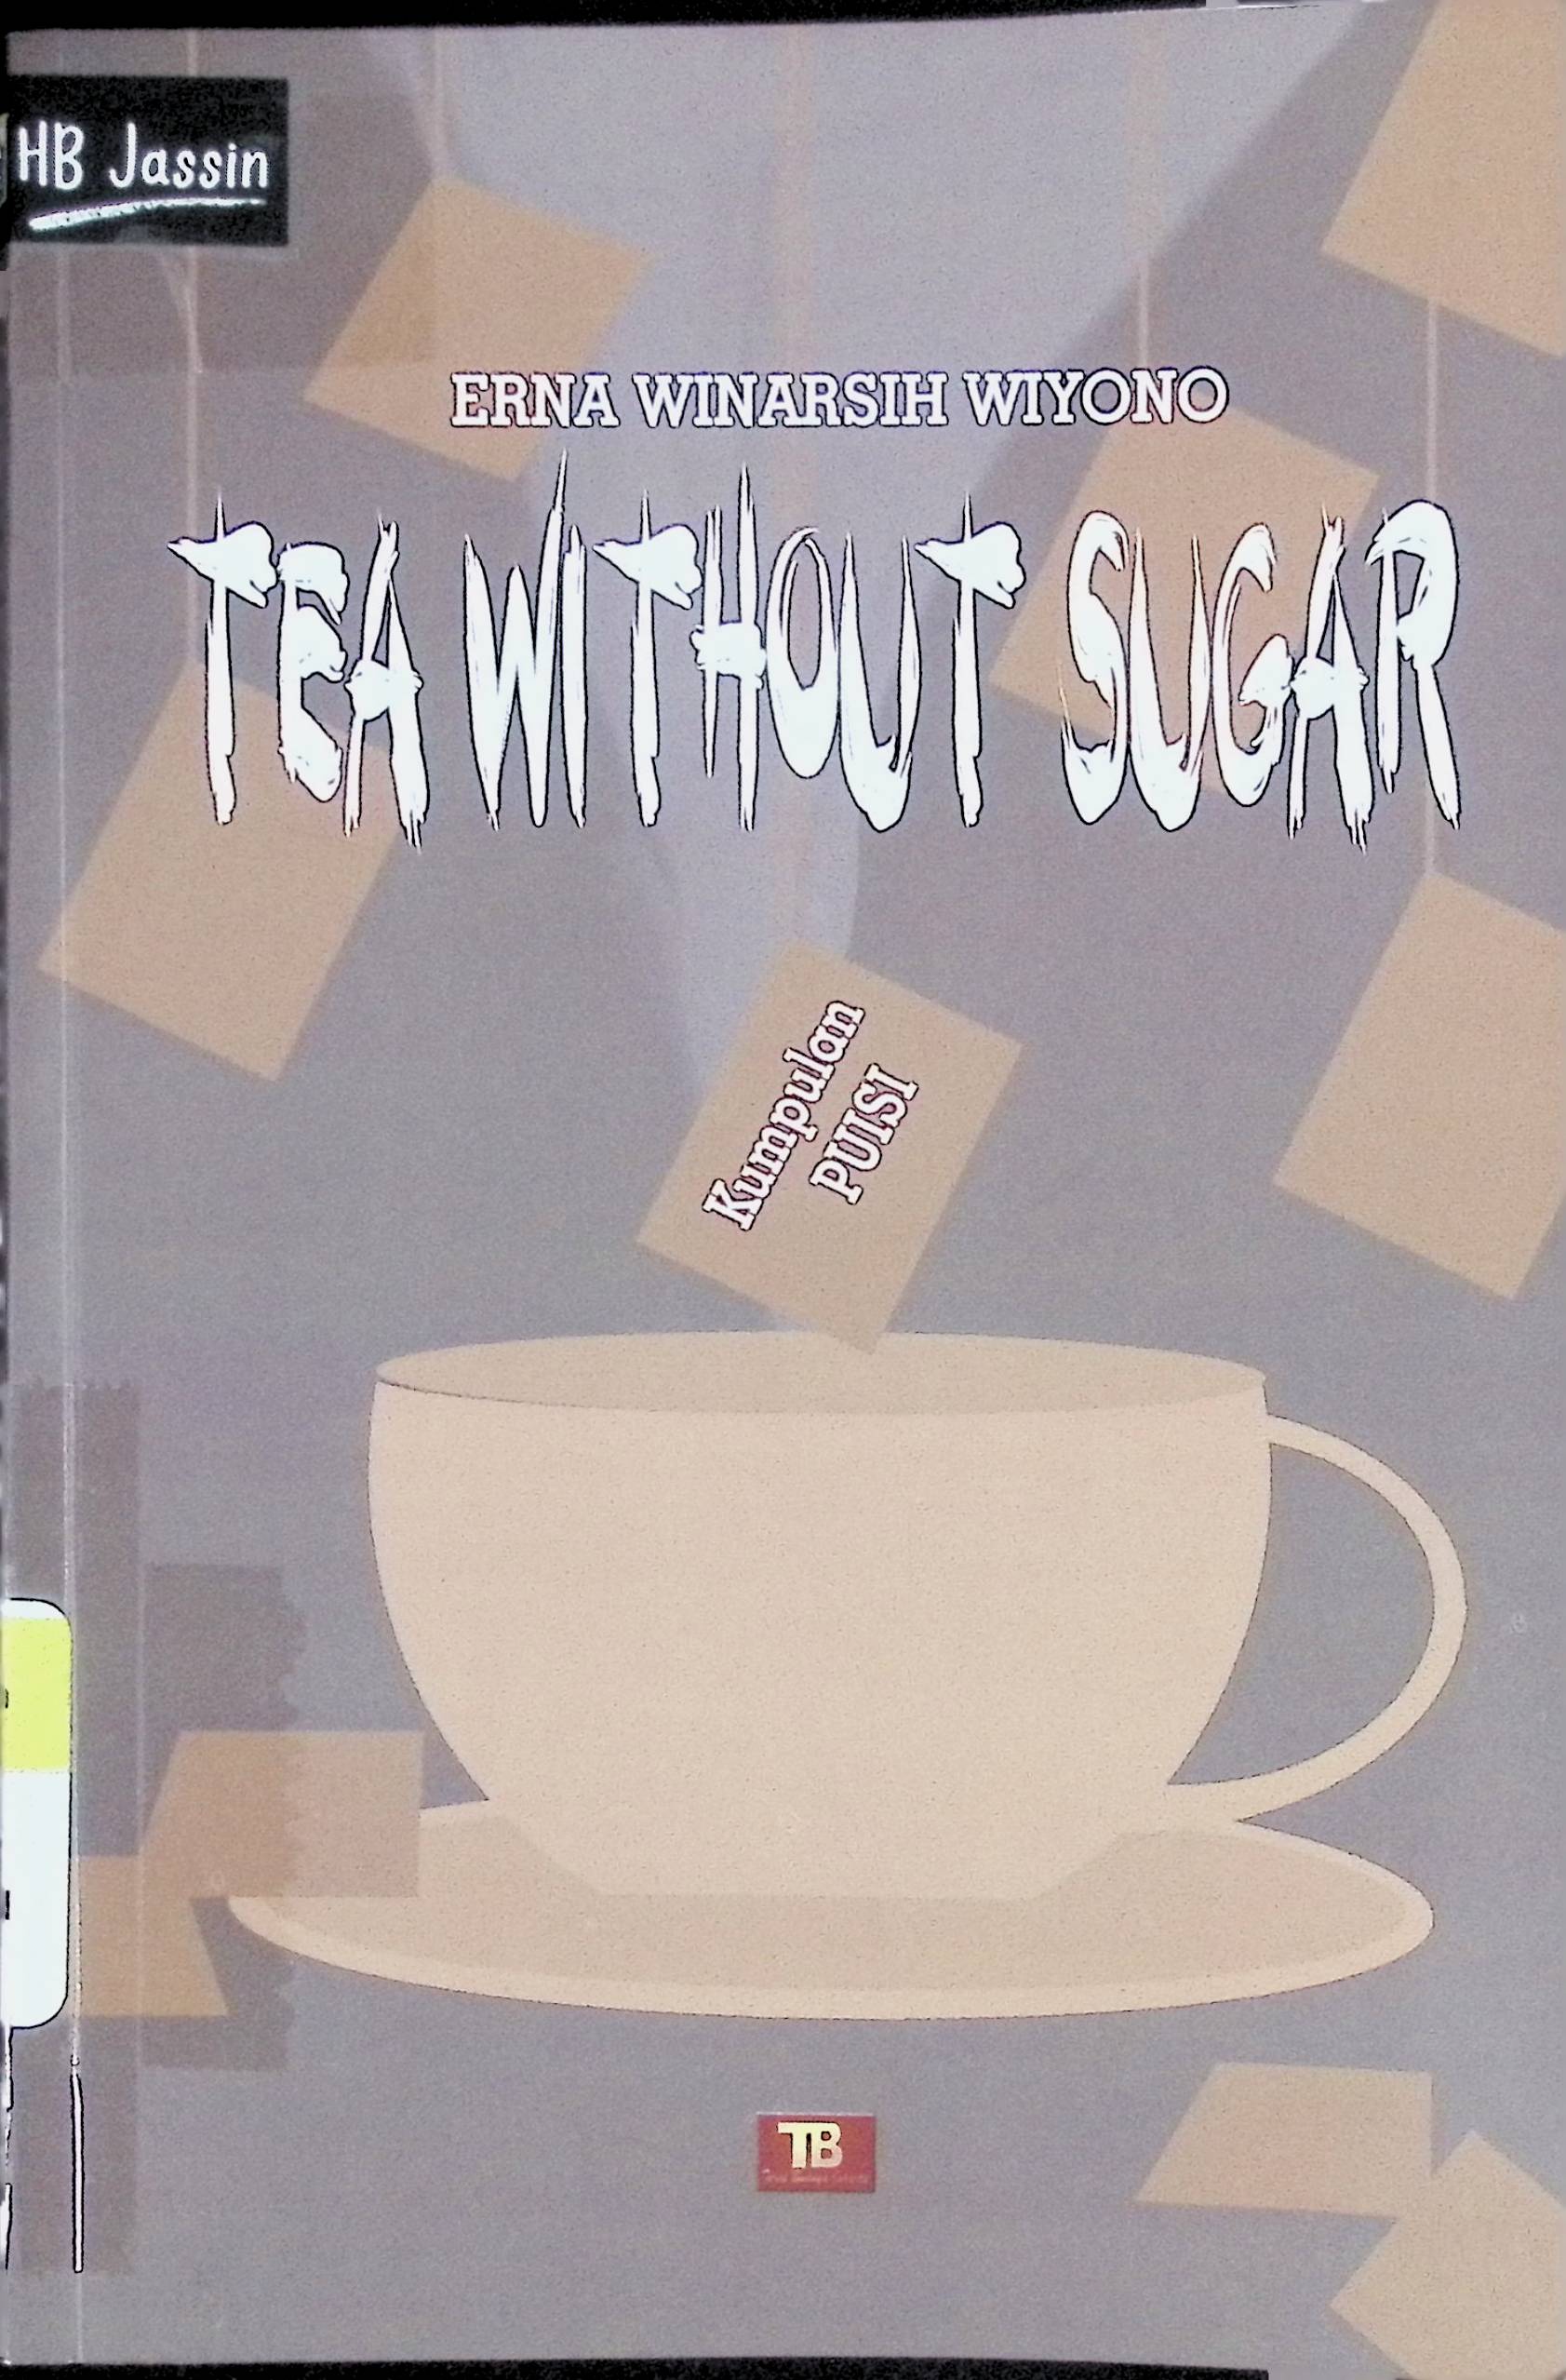 Tea without sugar